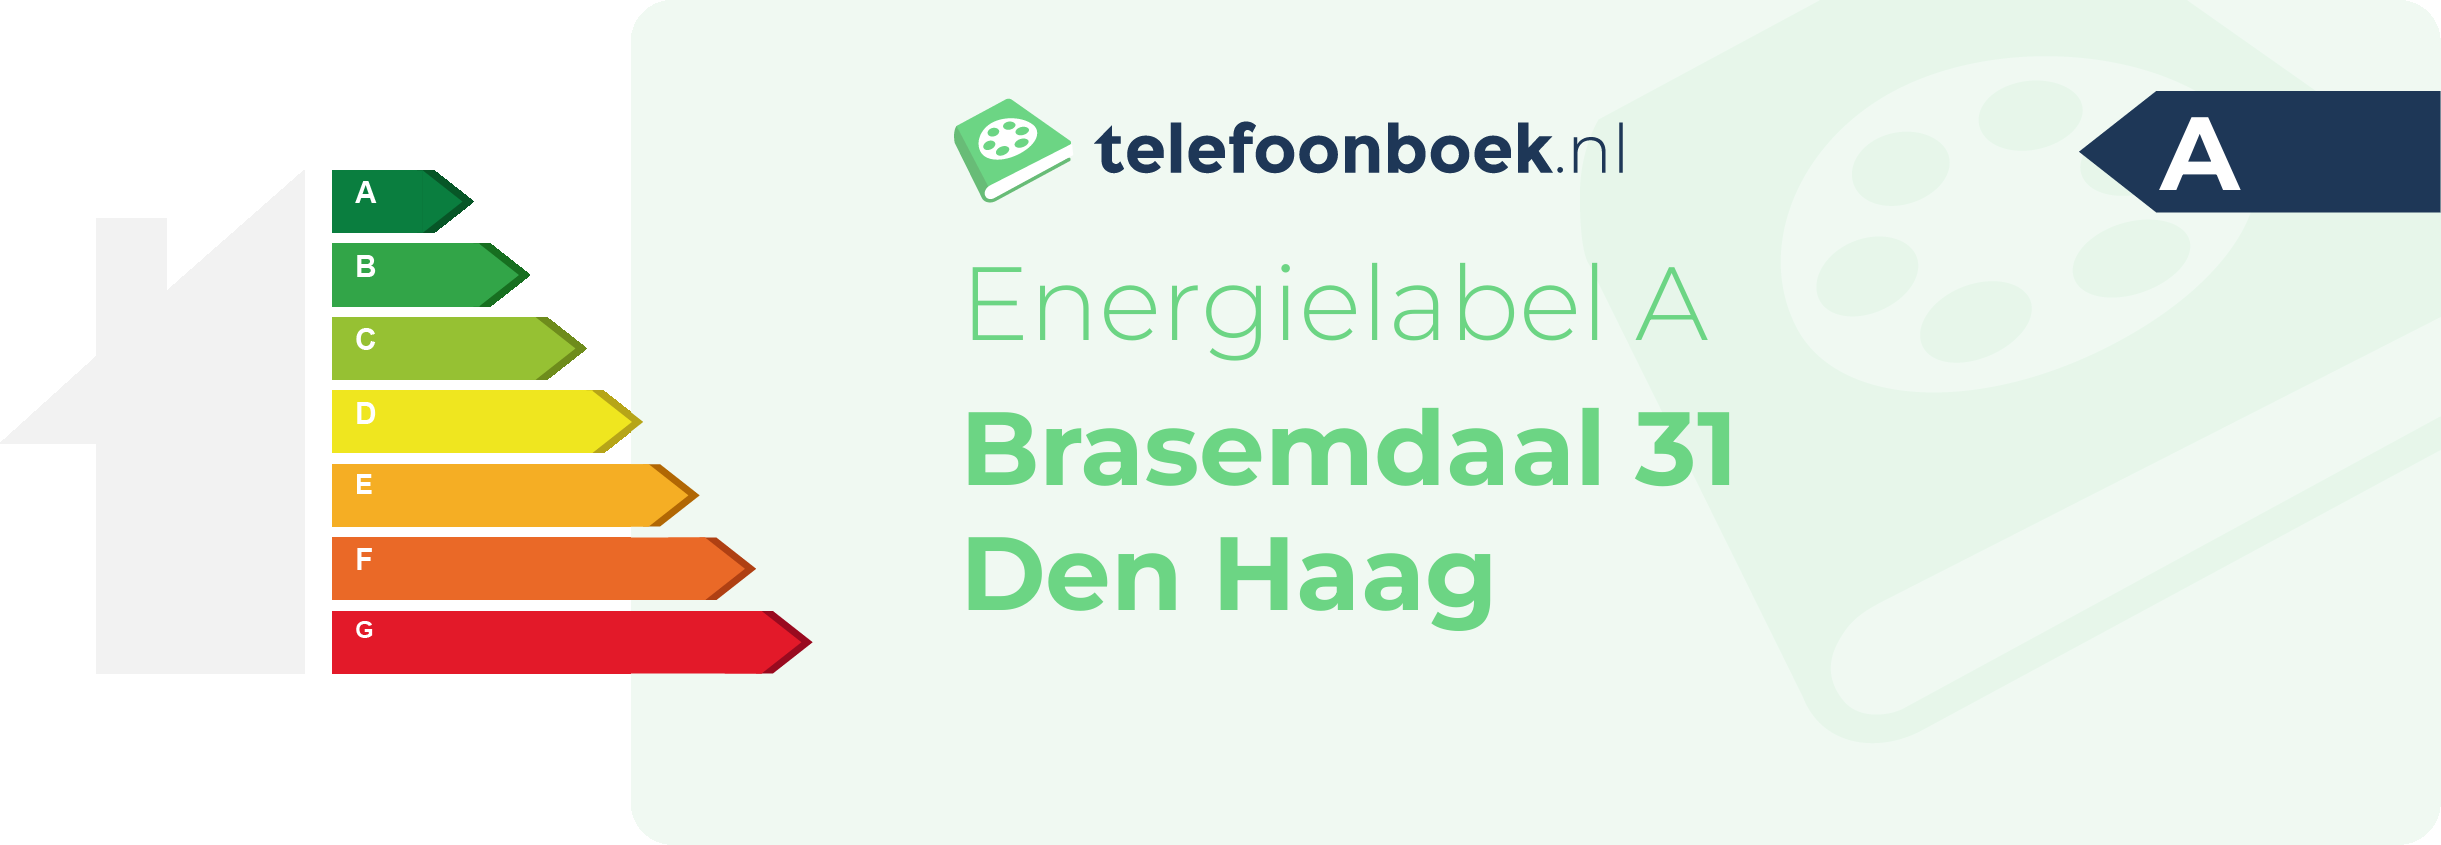 Energielabel Brasemdaal 31 Den Haag